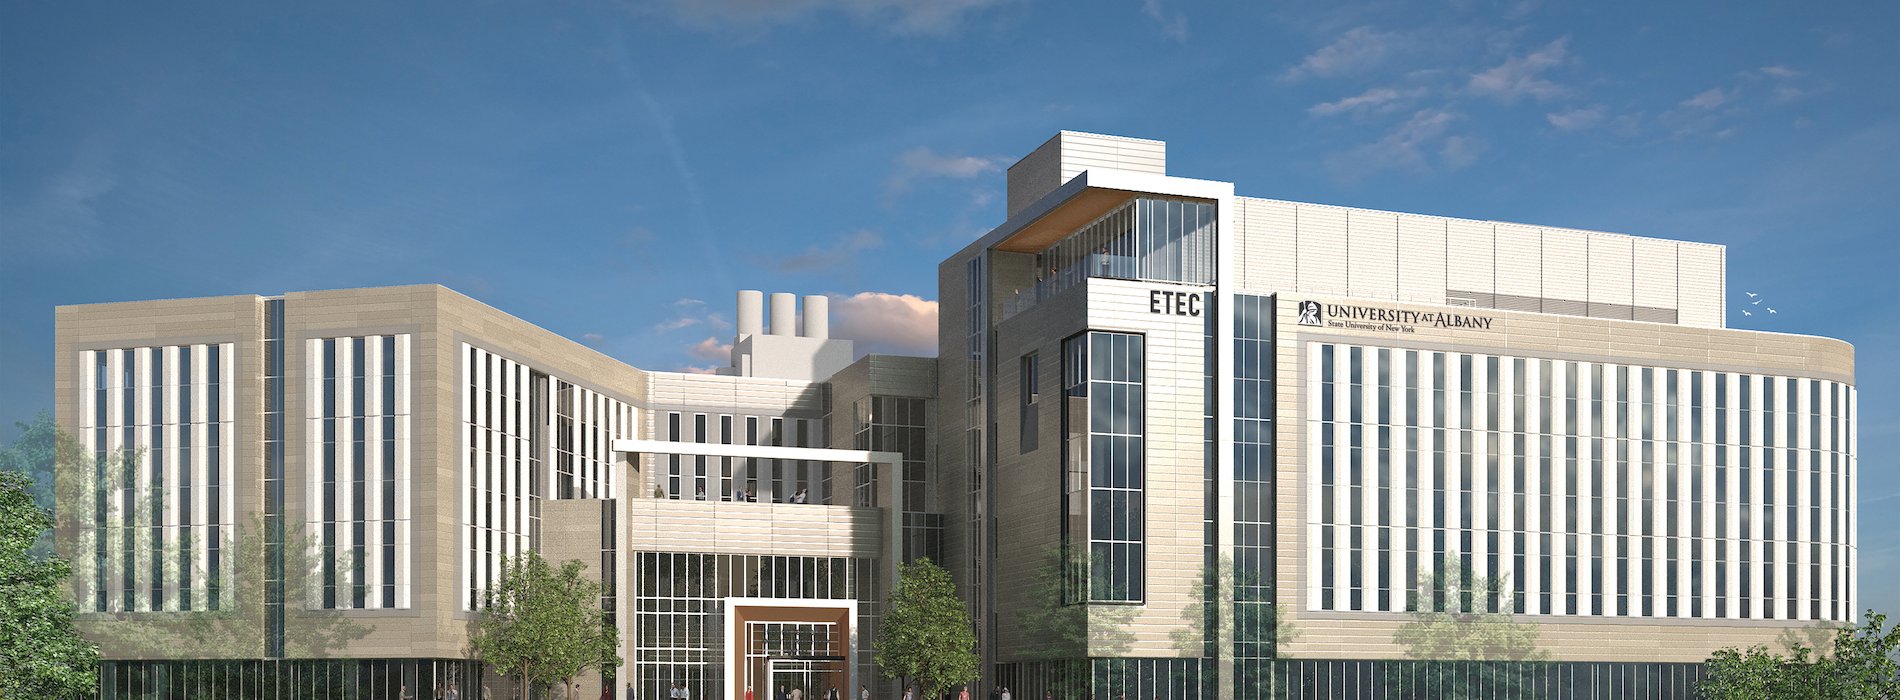 UAlbany Unveils 0M ETEC Research and Entrepreneurship Complex